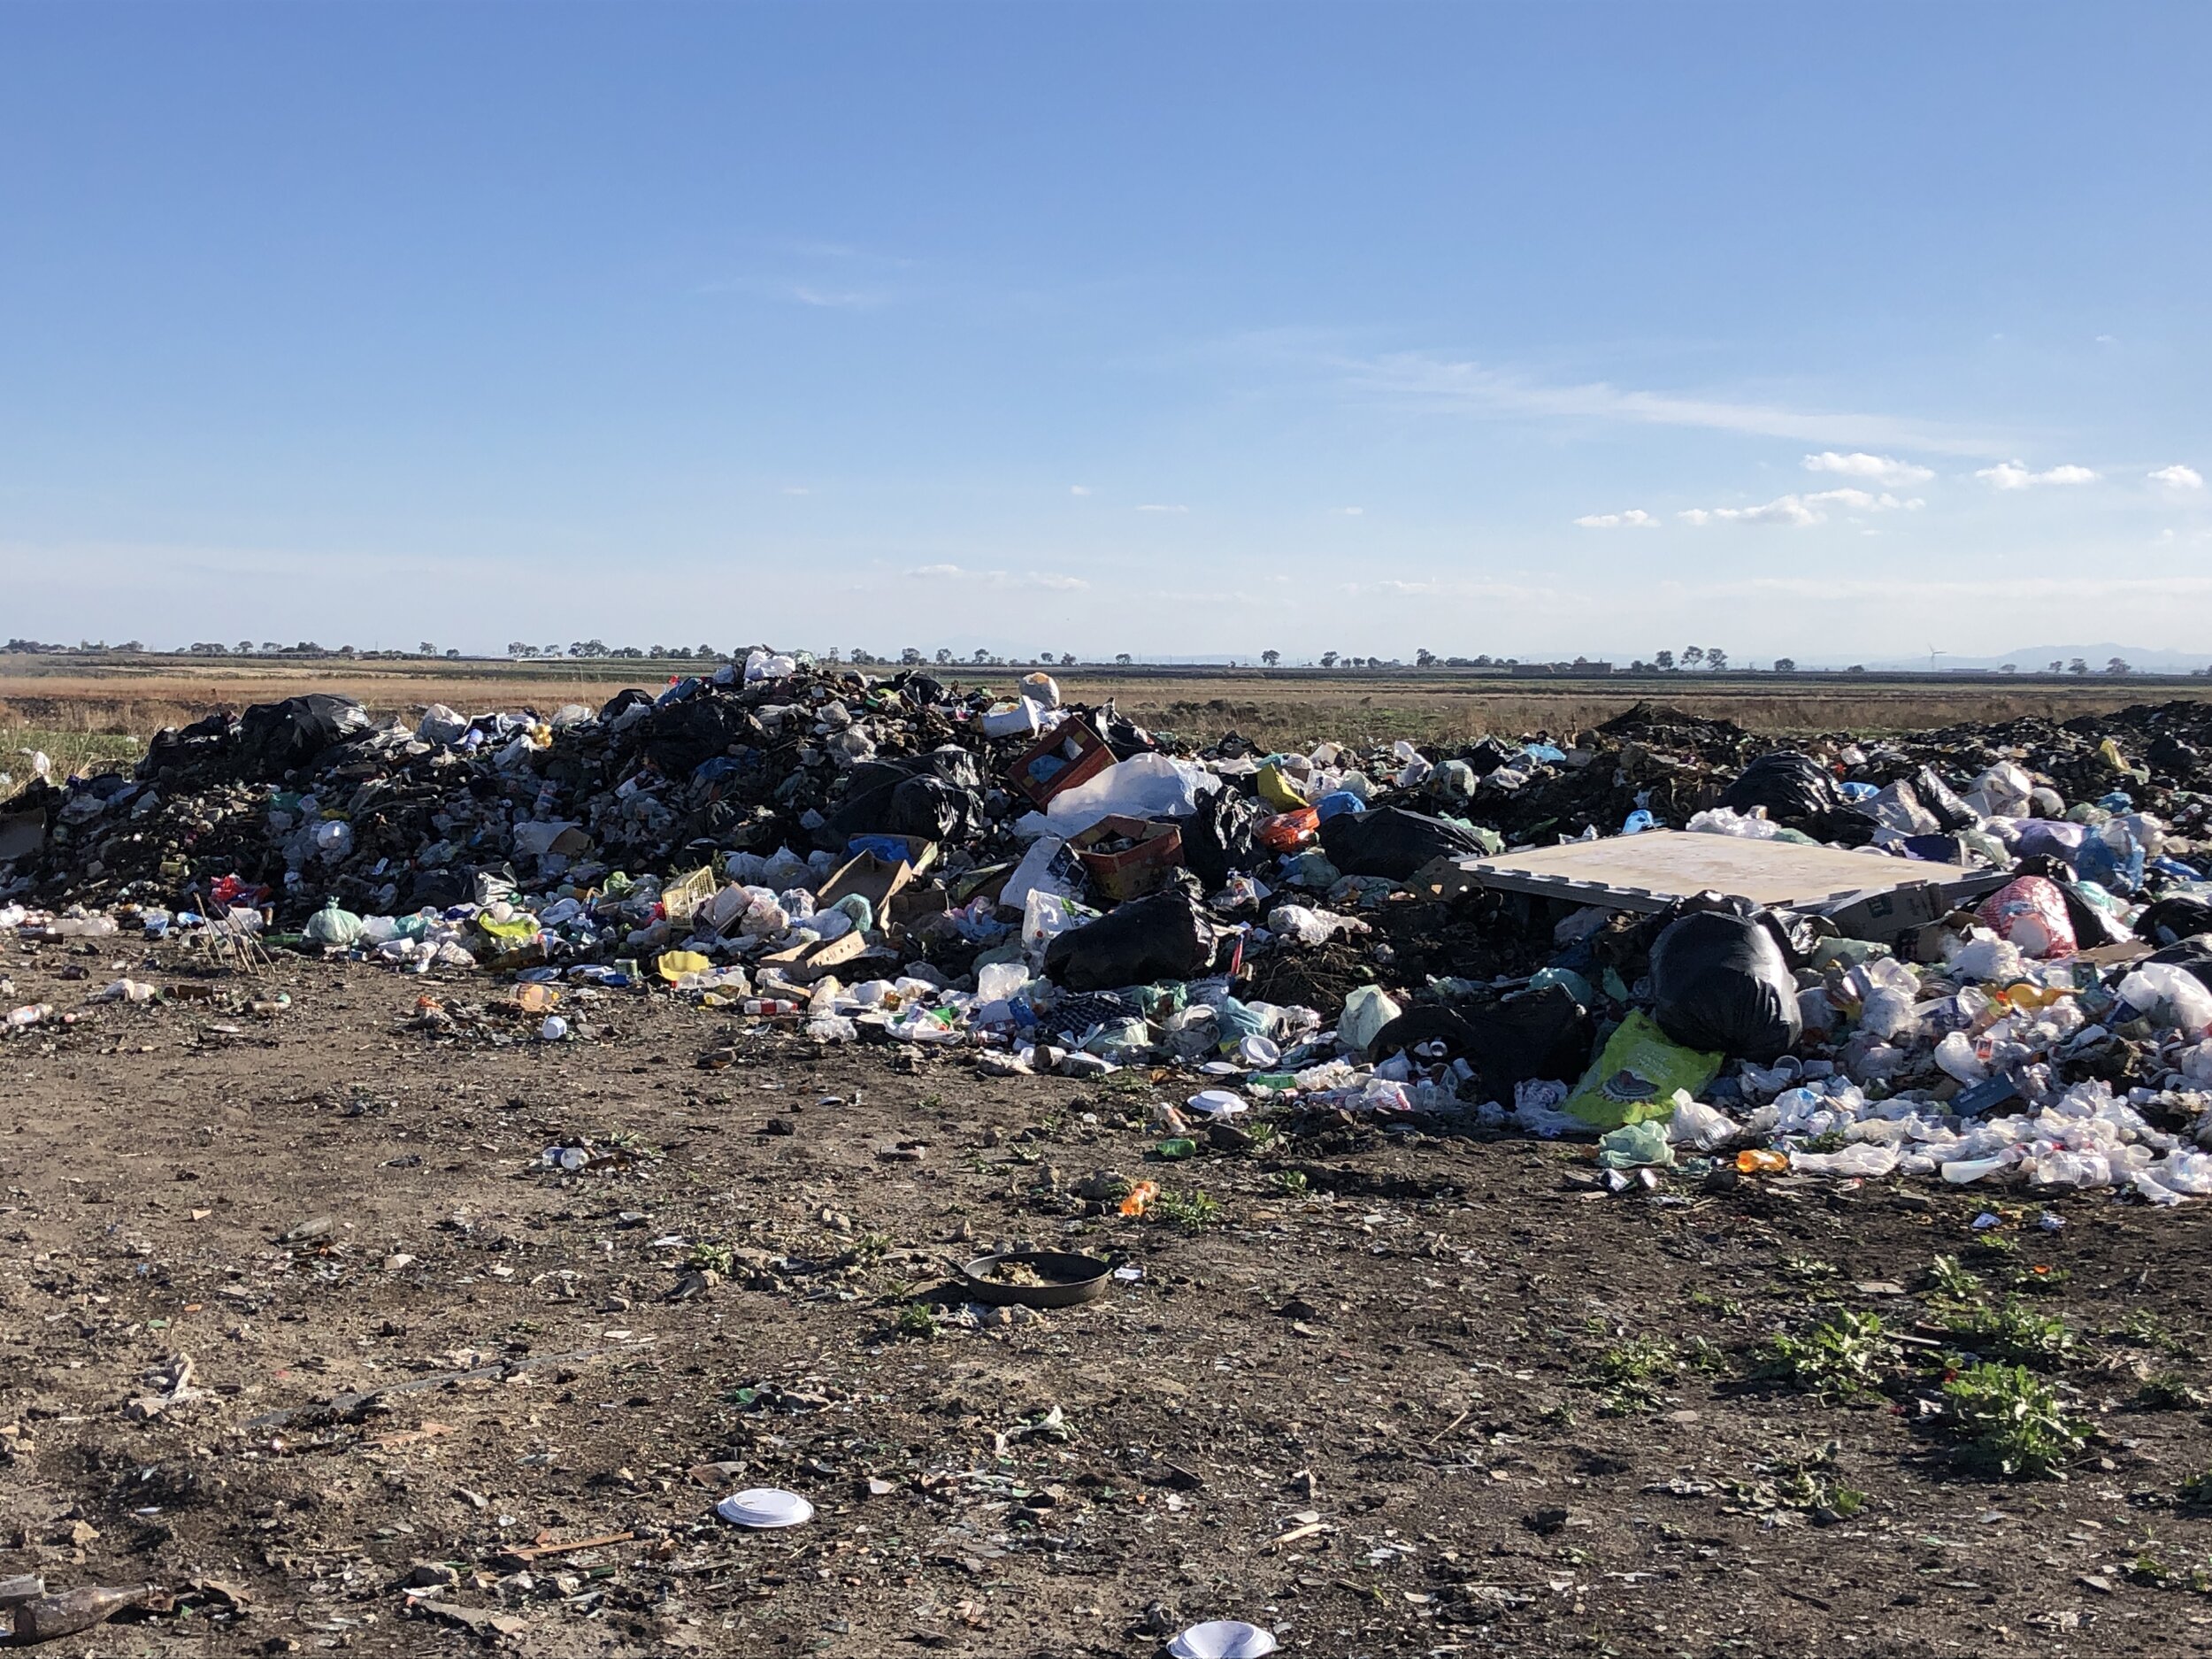   I cumuli di rifiuti dietro al ghetto. Foggia. 8 ottobre 2019. ©Pamela Kerpius  